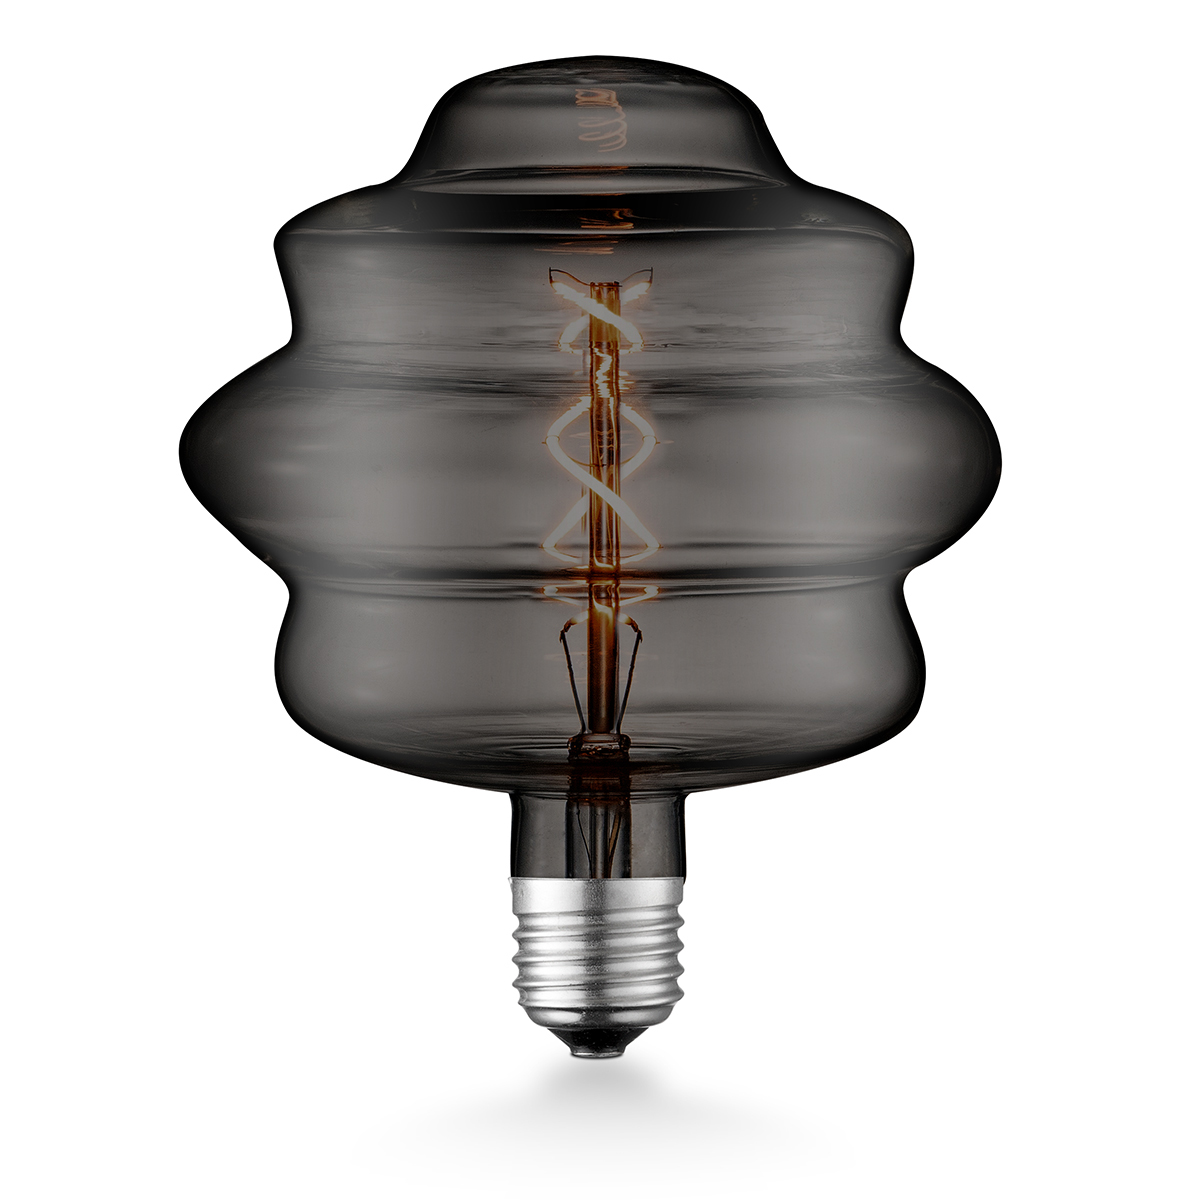 Tangla lighting - TLB-8036-06TM - LED Light Bulb Double Spiral filament - special 4W titanium - medium - gourd - dimmable - E27